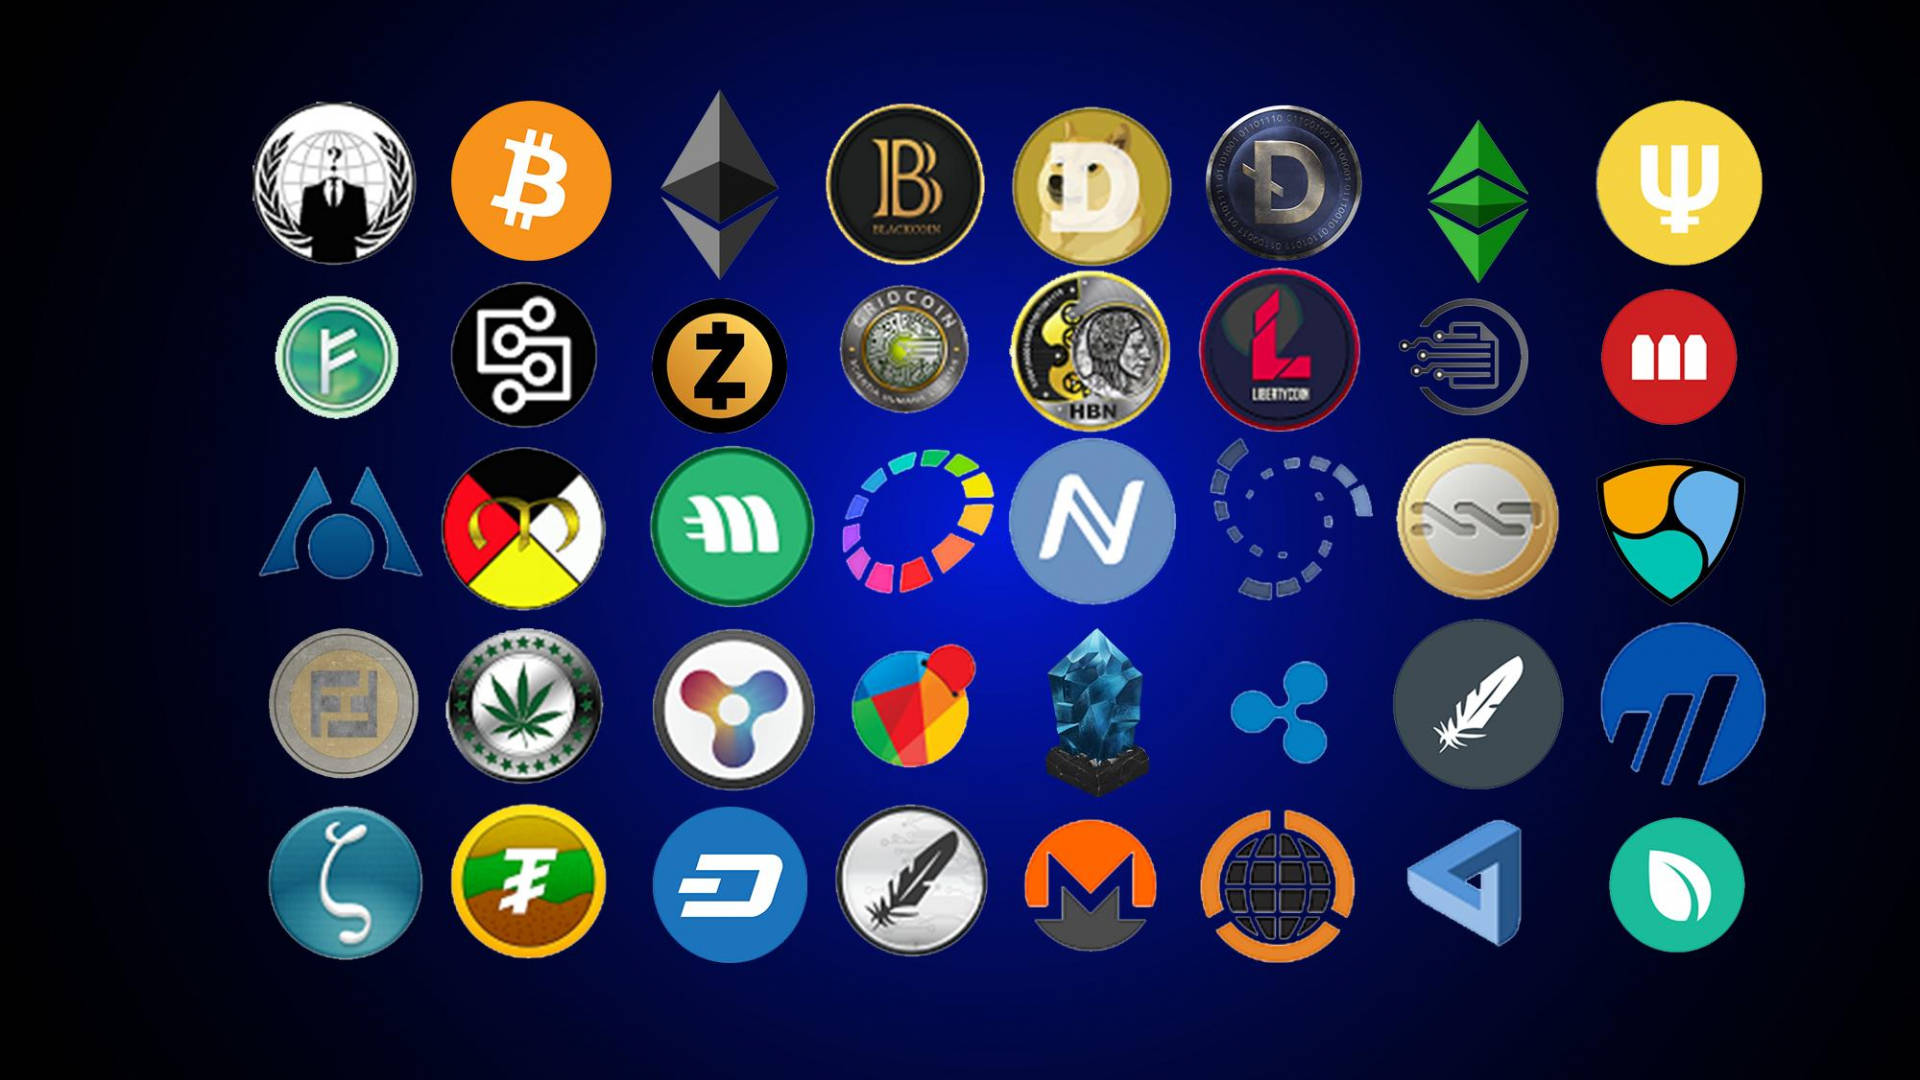 Ethereum Cryptocurrencies Icons Background